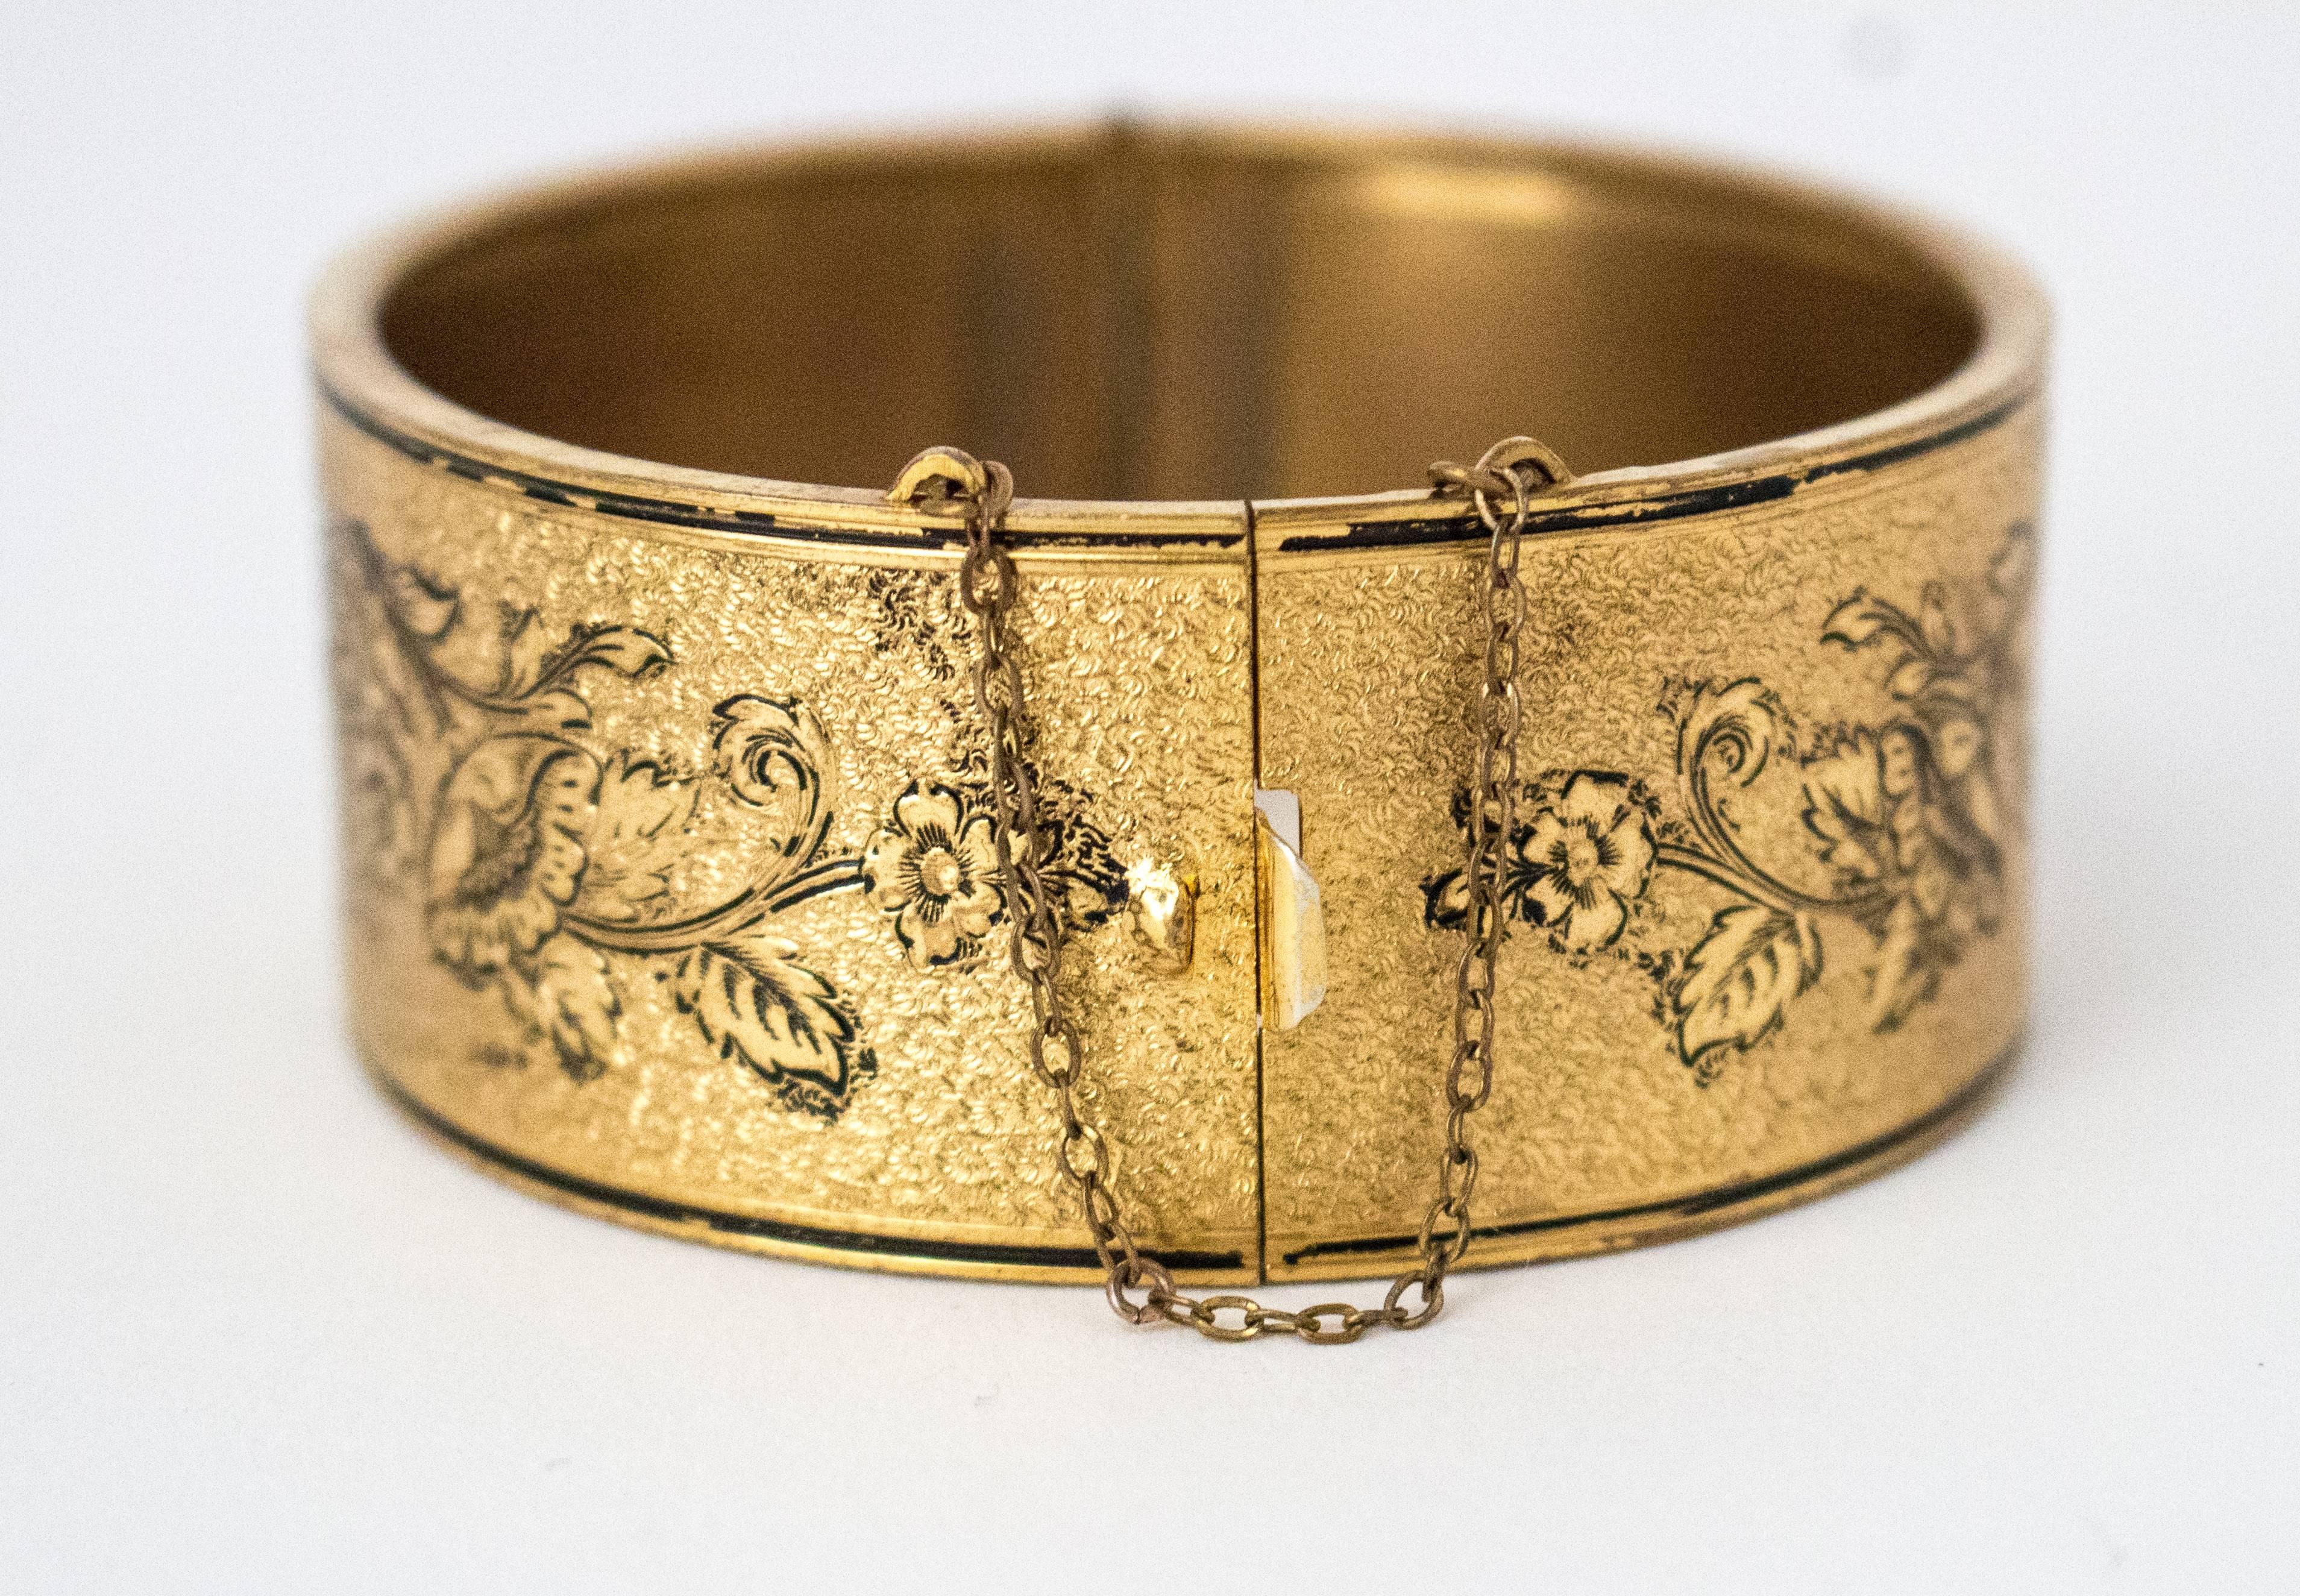 1890s Victorian Gold-filled Bracelet with Floral Design. Original safety chain. 